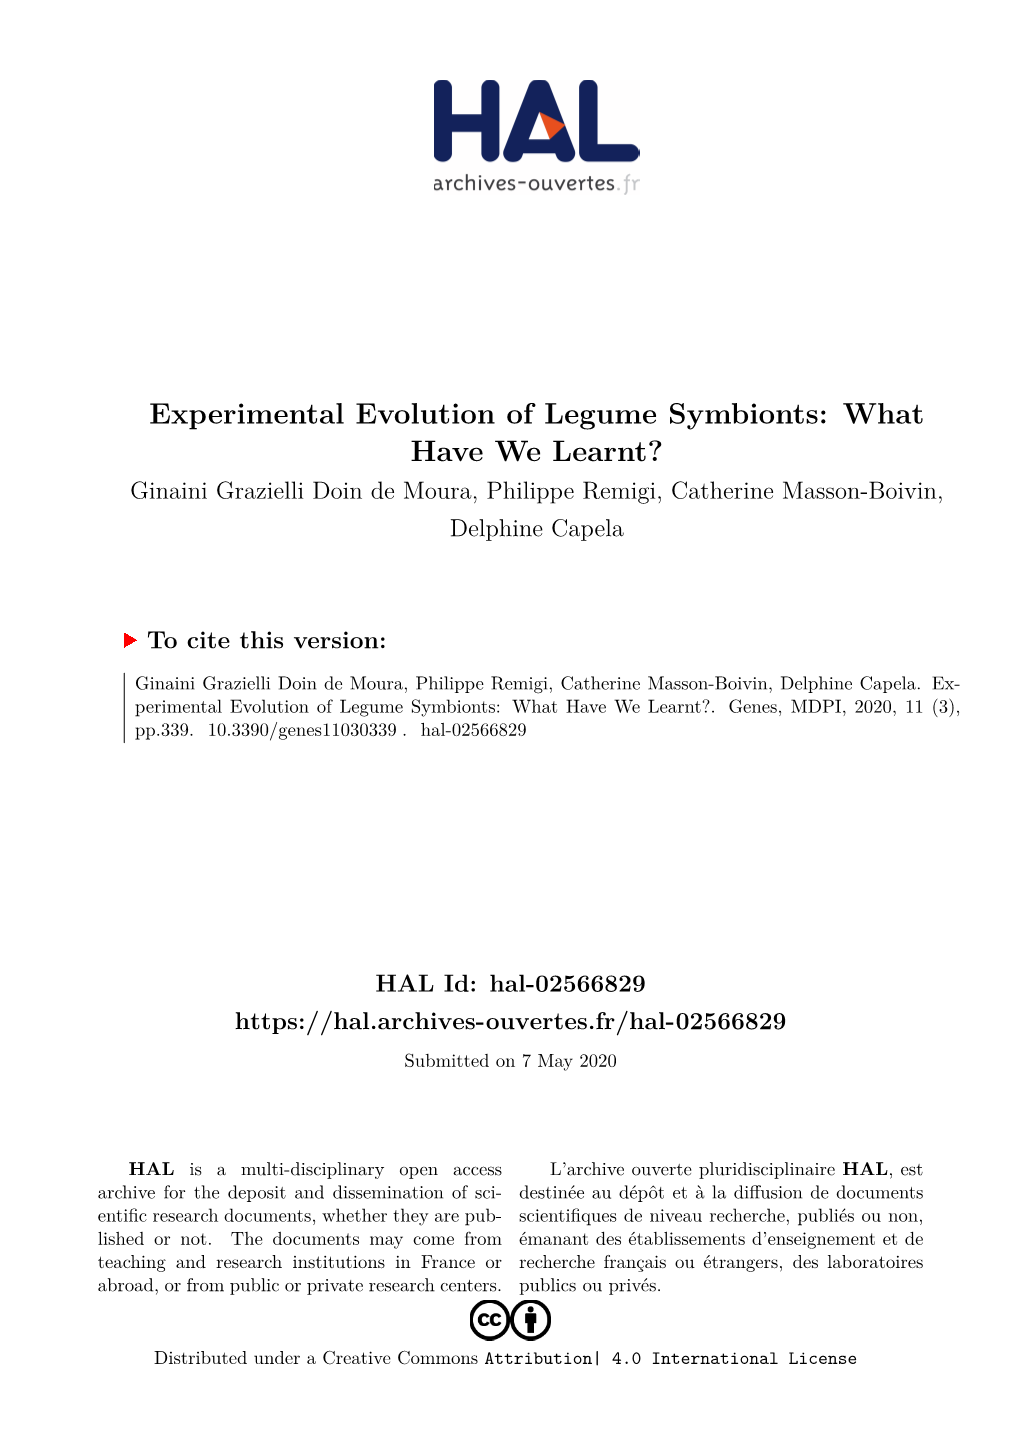 Experimental Evolution of Legume Symbionts: What Have We Learnt? Ginaini Grazielli Doin De Moura, Philippe Remigi, Catherine Masson-Boivin, Delphine Capela